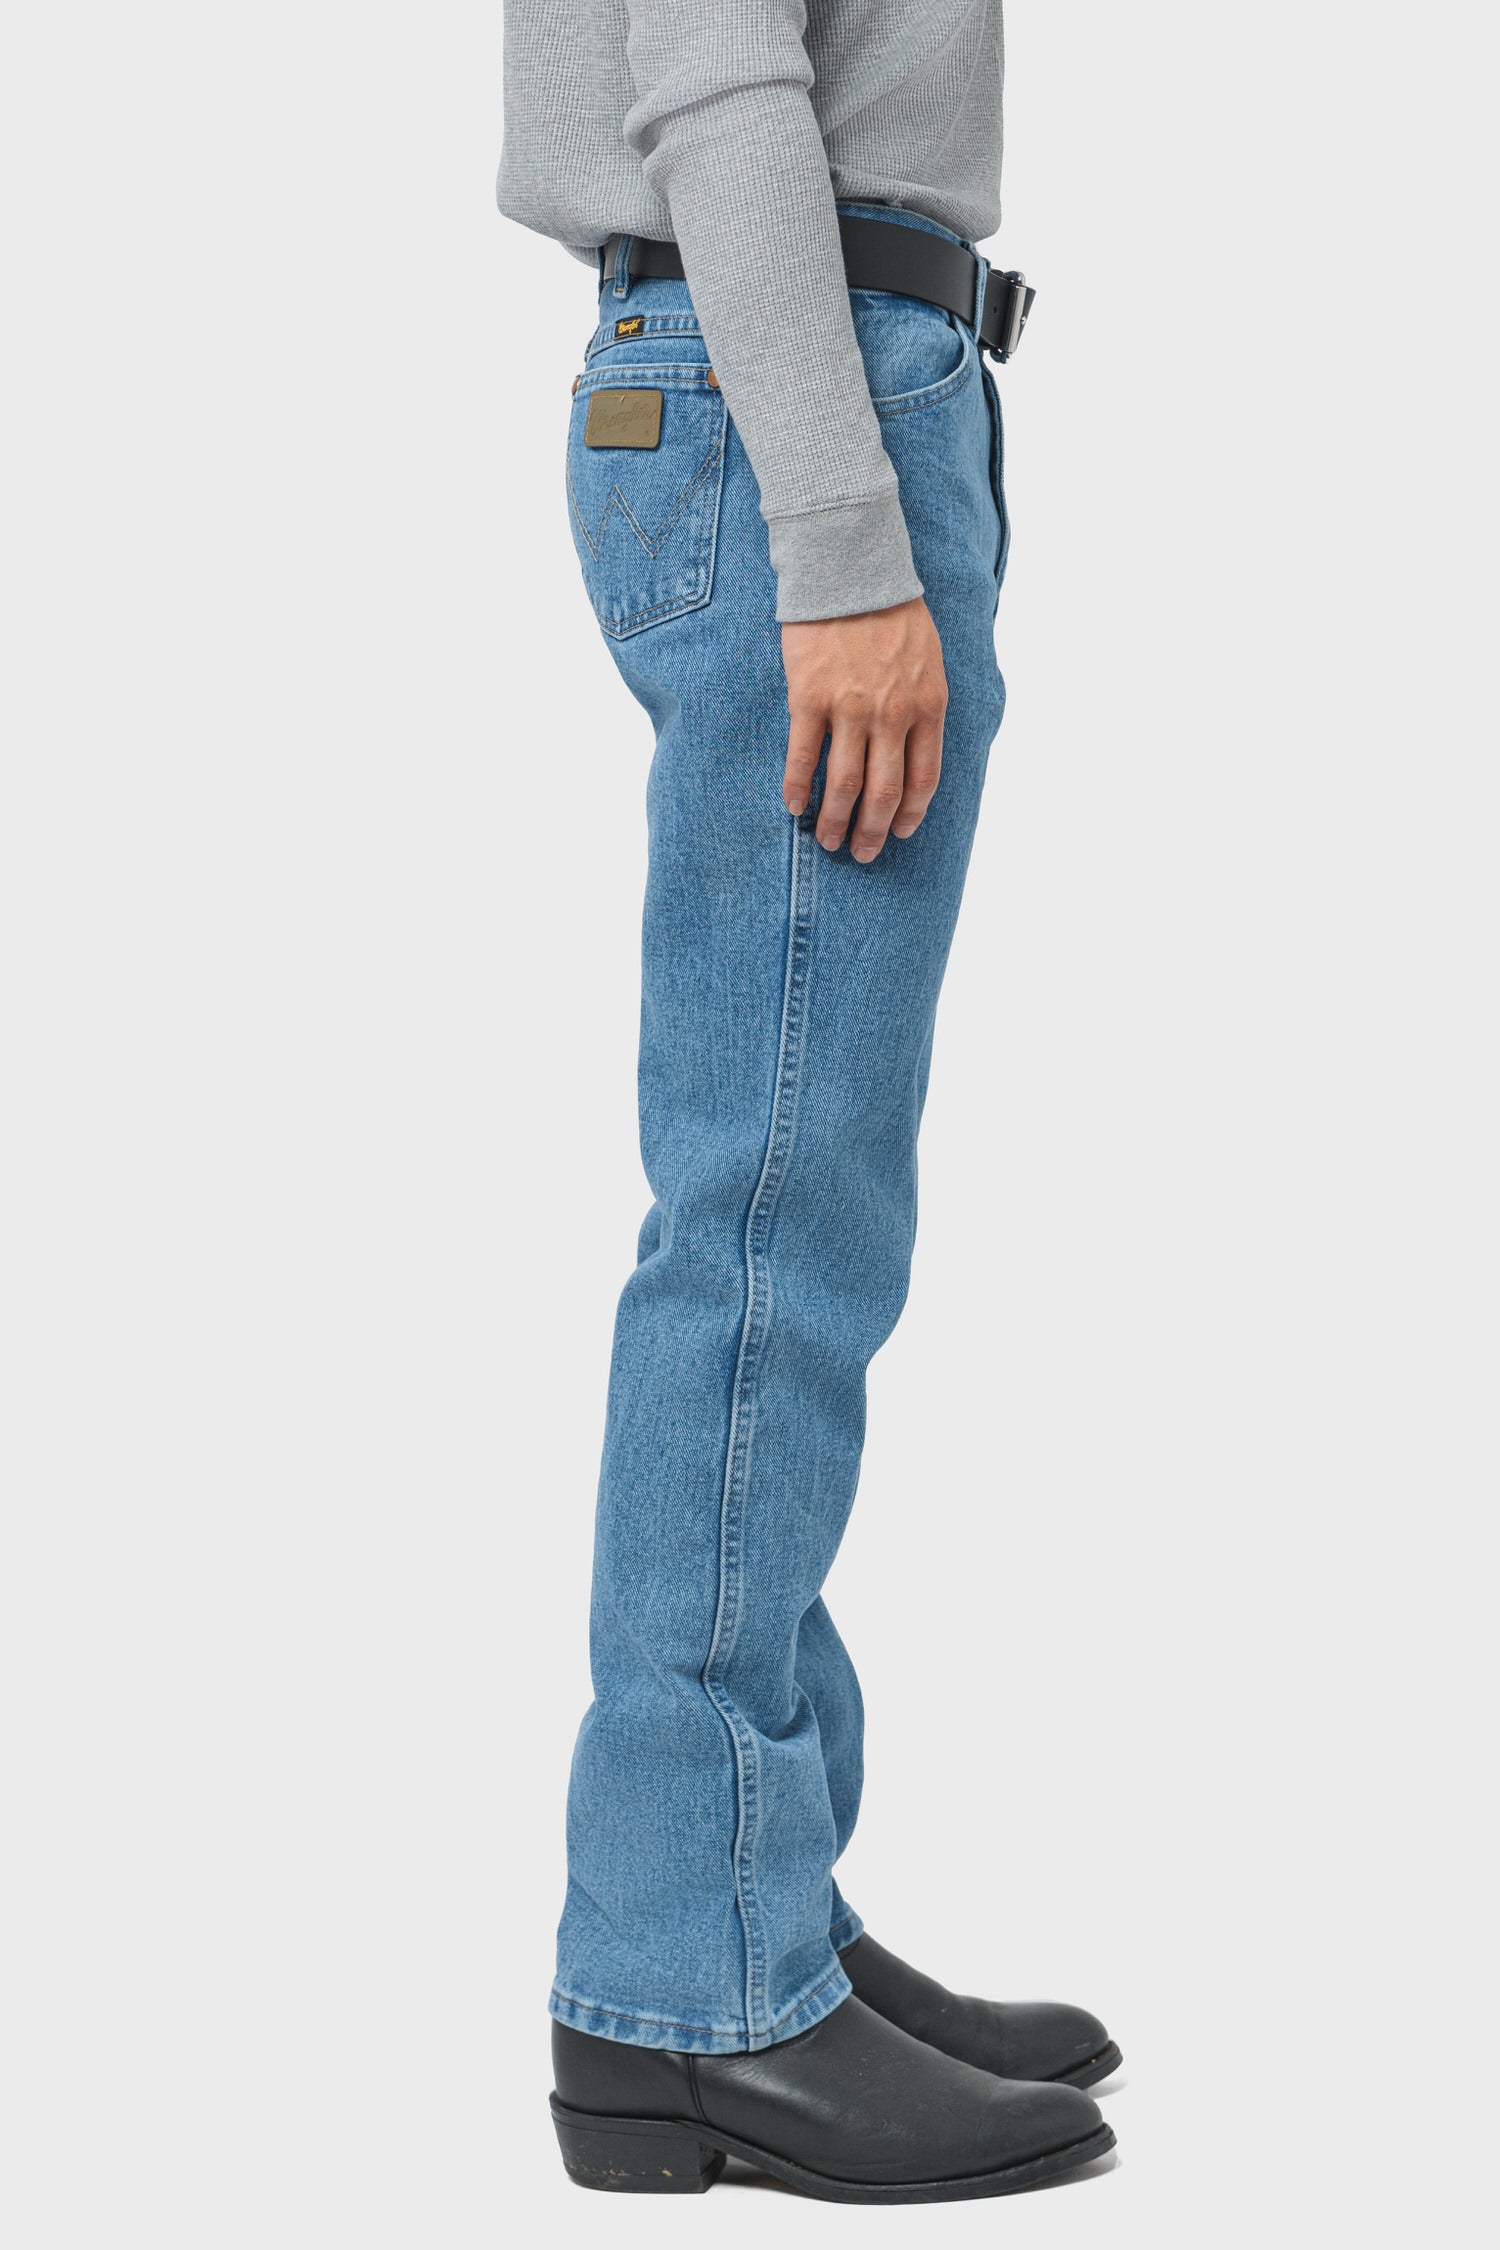 Men's Wrangler Cowboy Cut Slim Fit Jean in Antique Wash